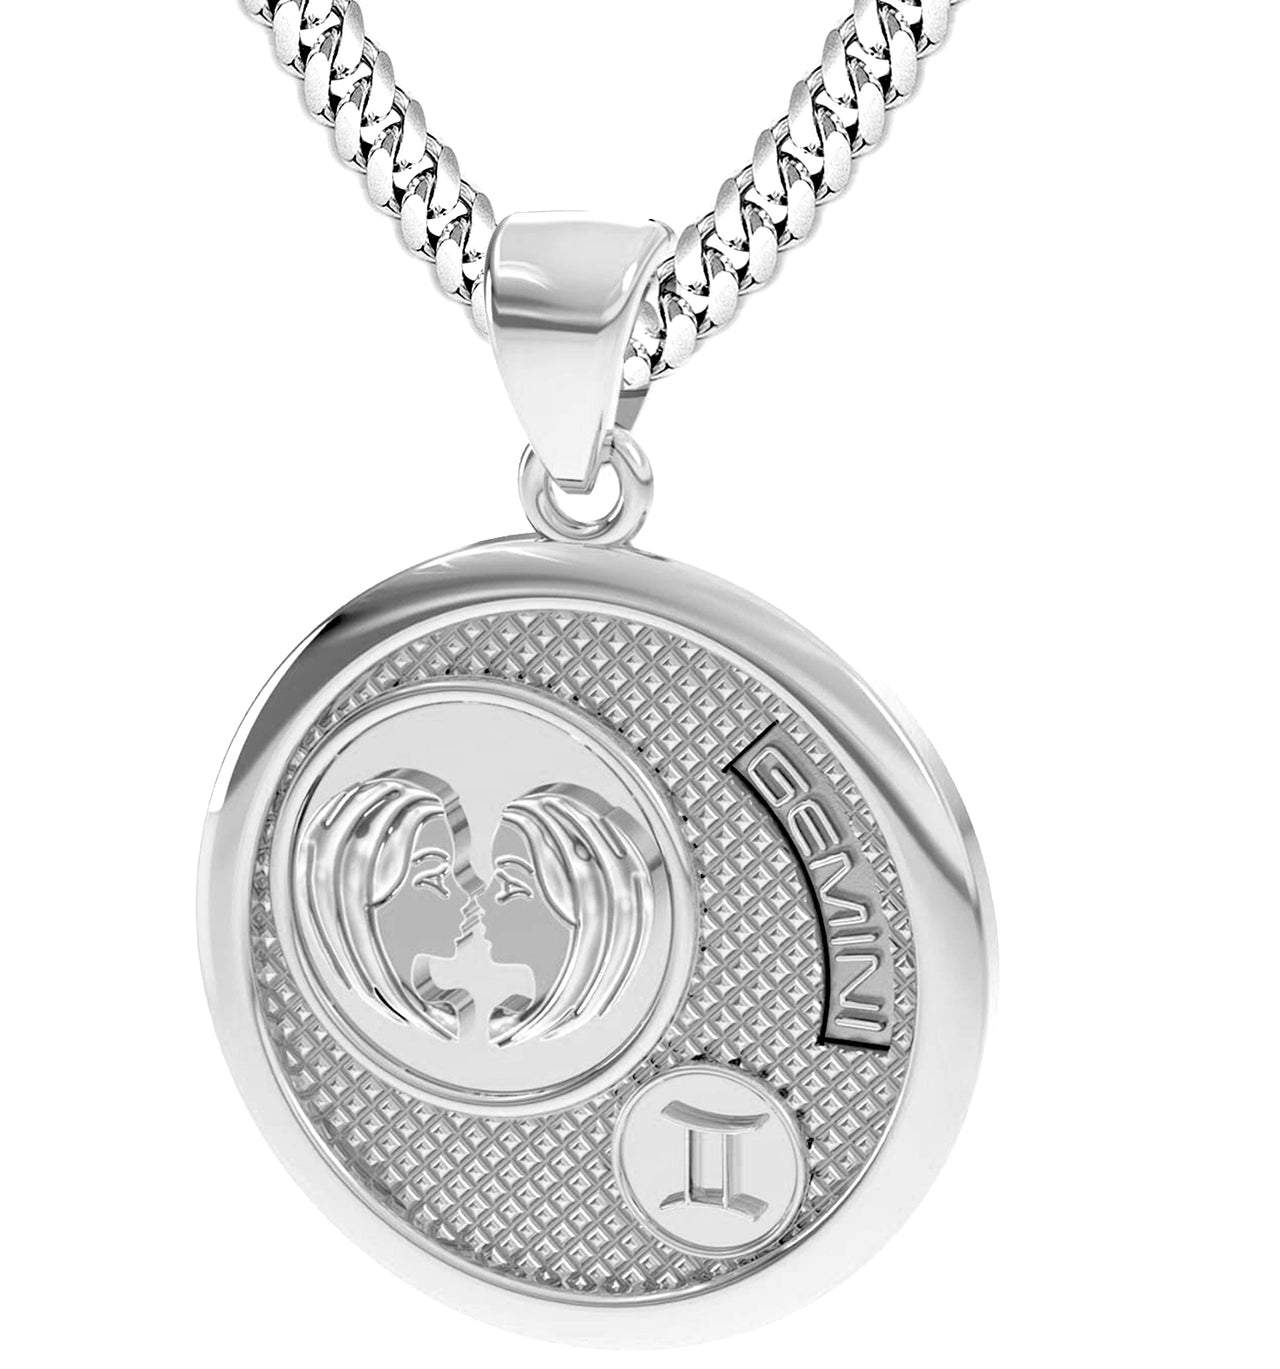 Men's 925 Sterling Silver Round Gemini Zodiac Polished Finish Pendant Necklace, 33mm